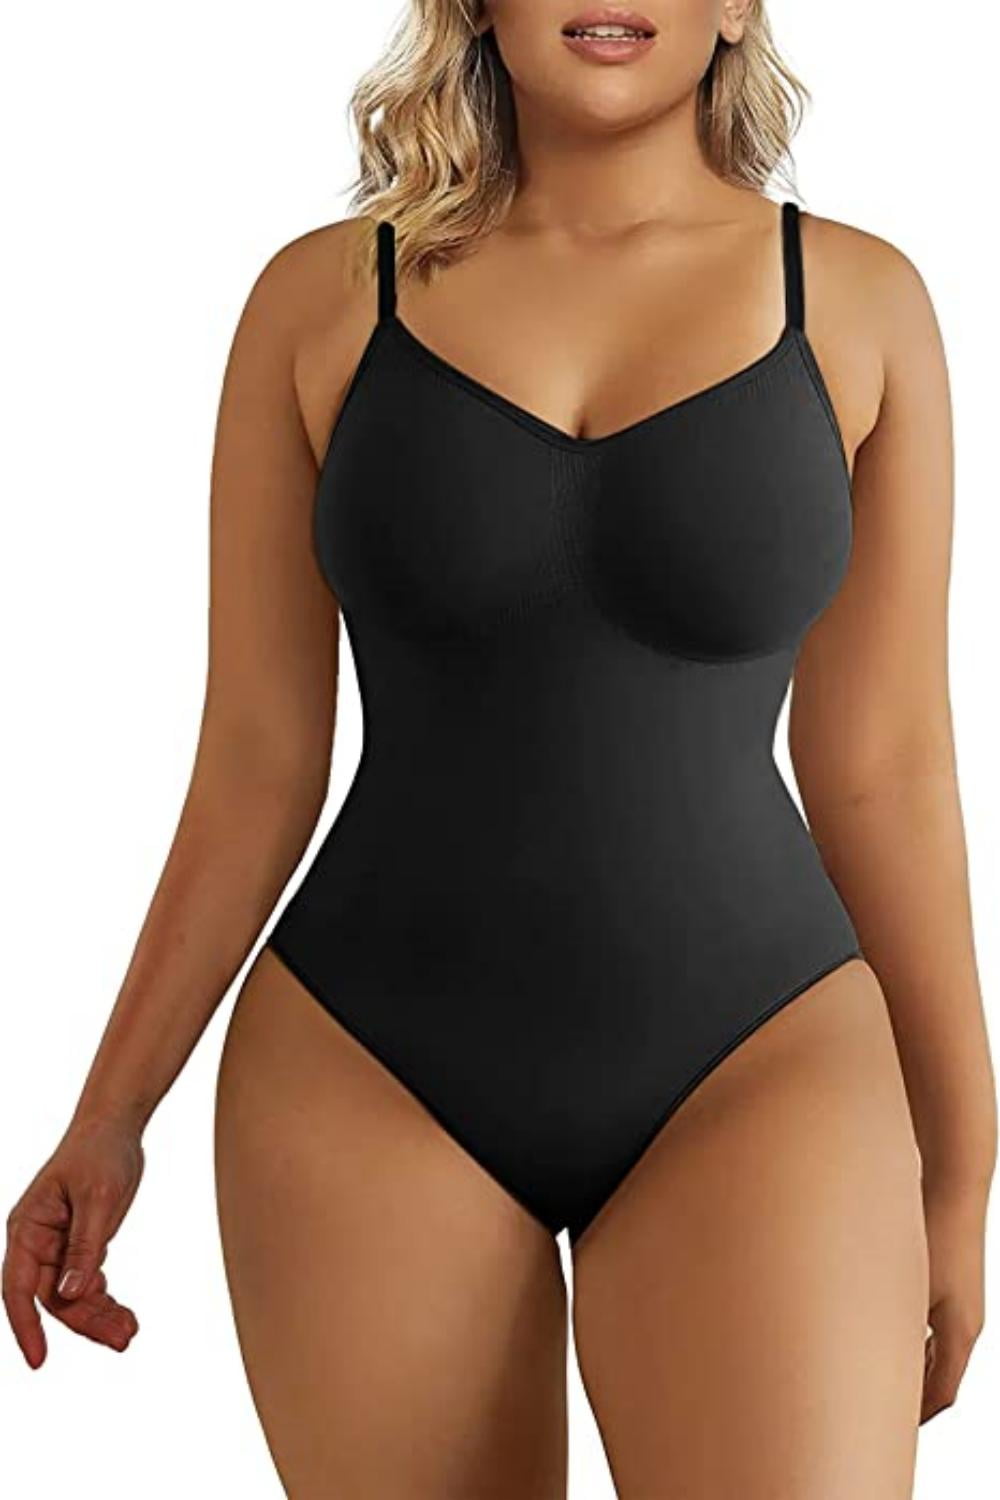 Bodysuit For Women Seamless Full Body Suits Shapewear Tummy